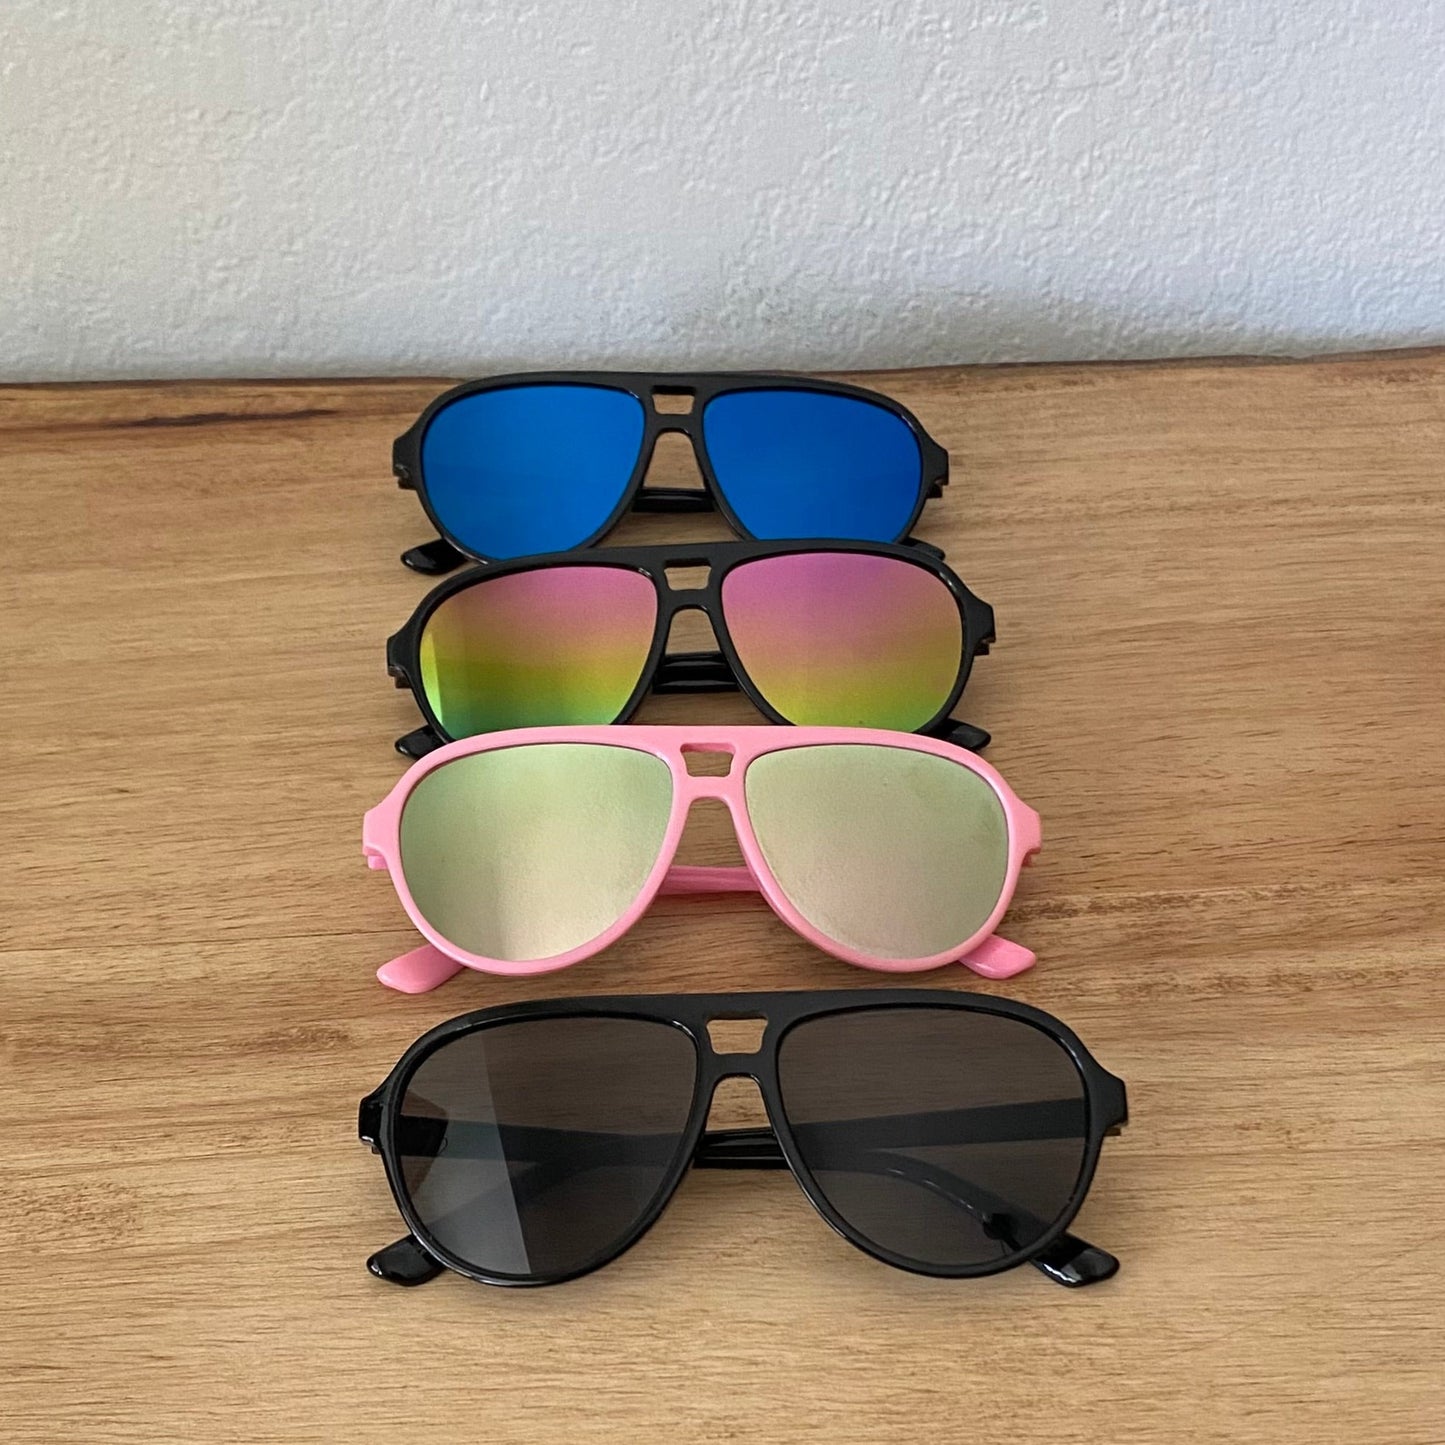 The Double Sunglasses